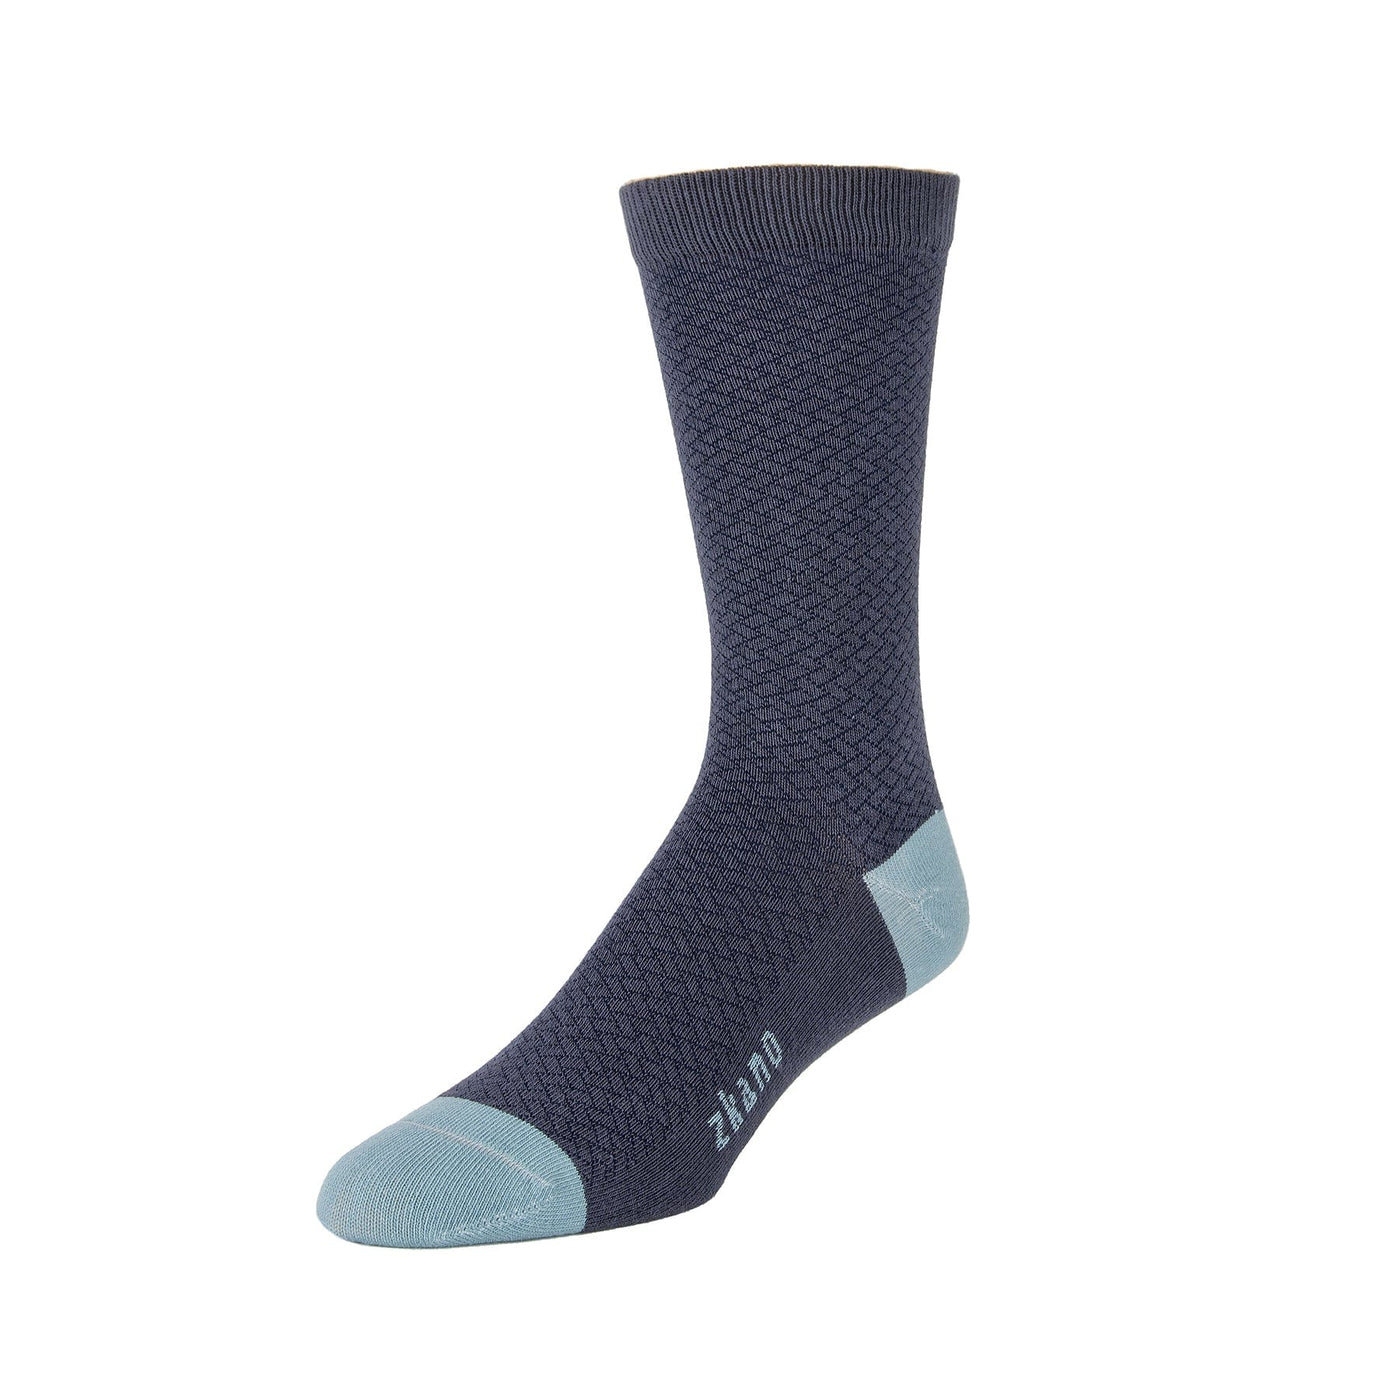 Zkano Crew Large Cobblestone - Textured Organic Cotton Crew Socks - Indigo organic-socks-made-in-usa